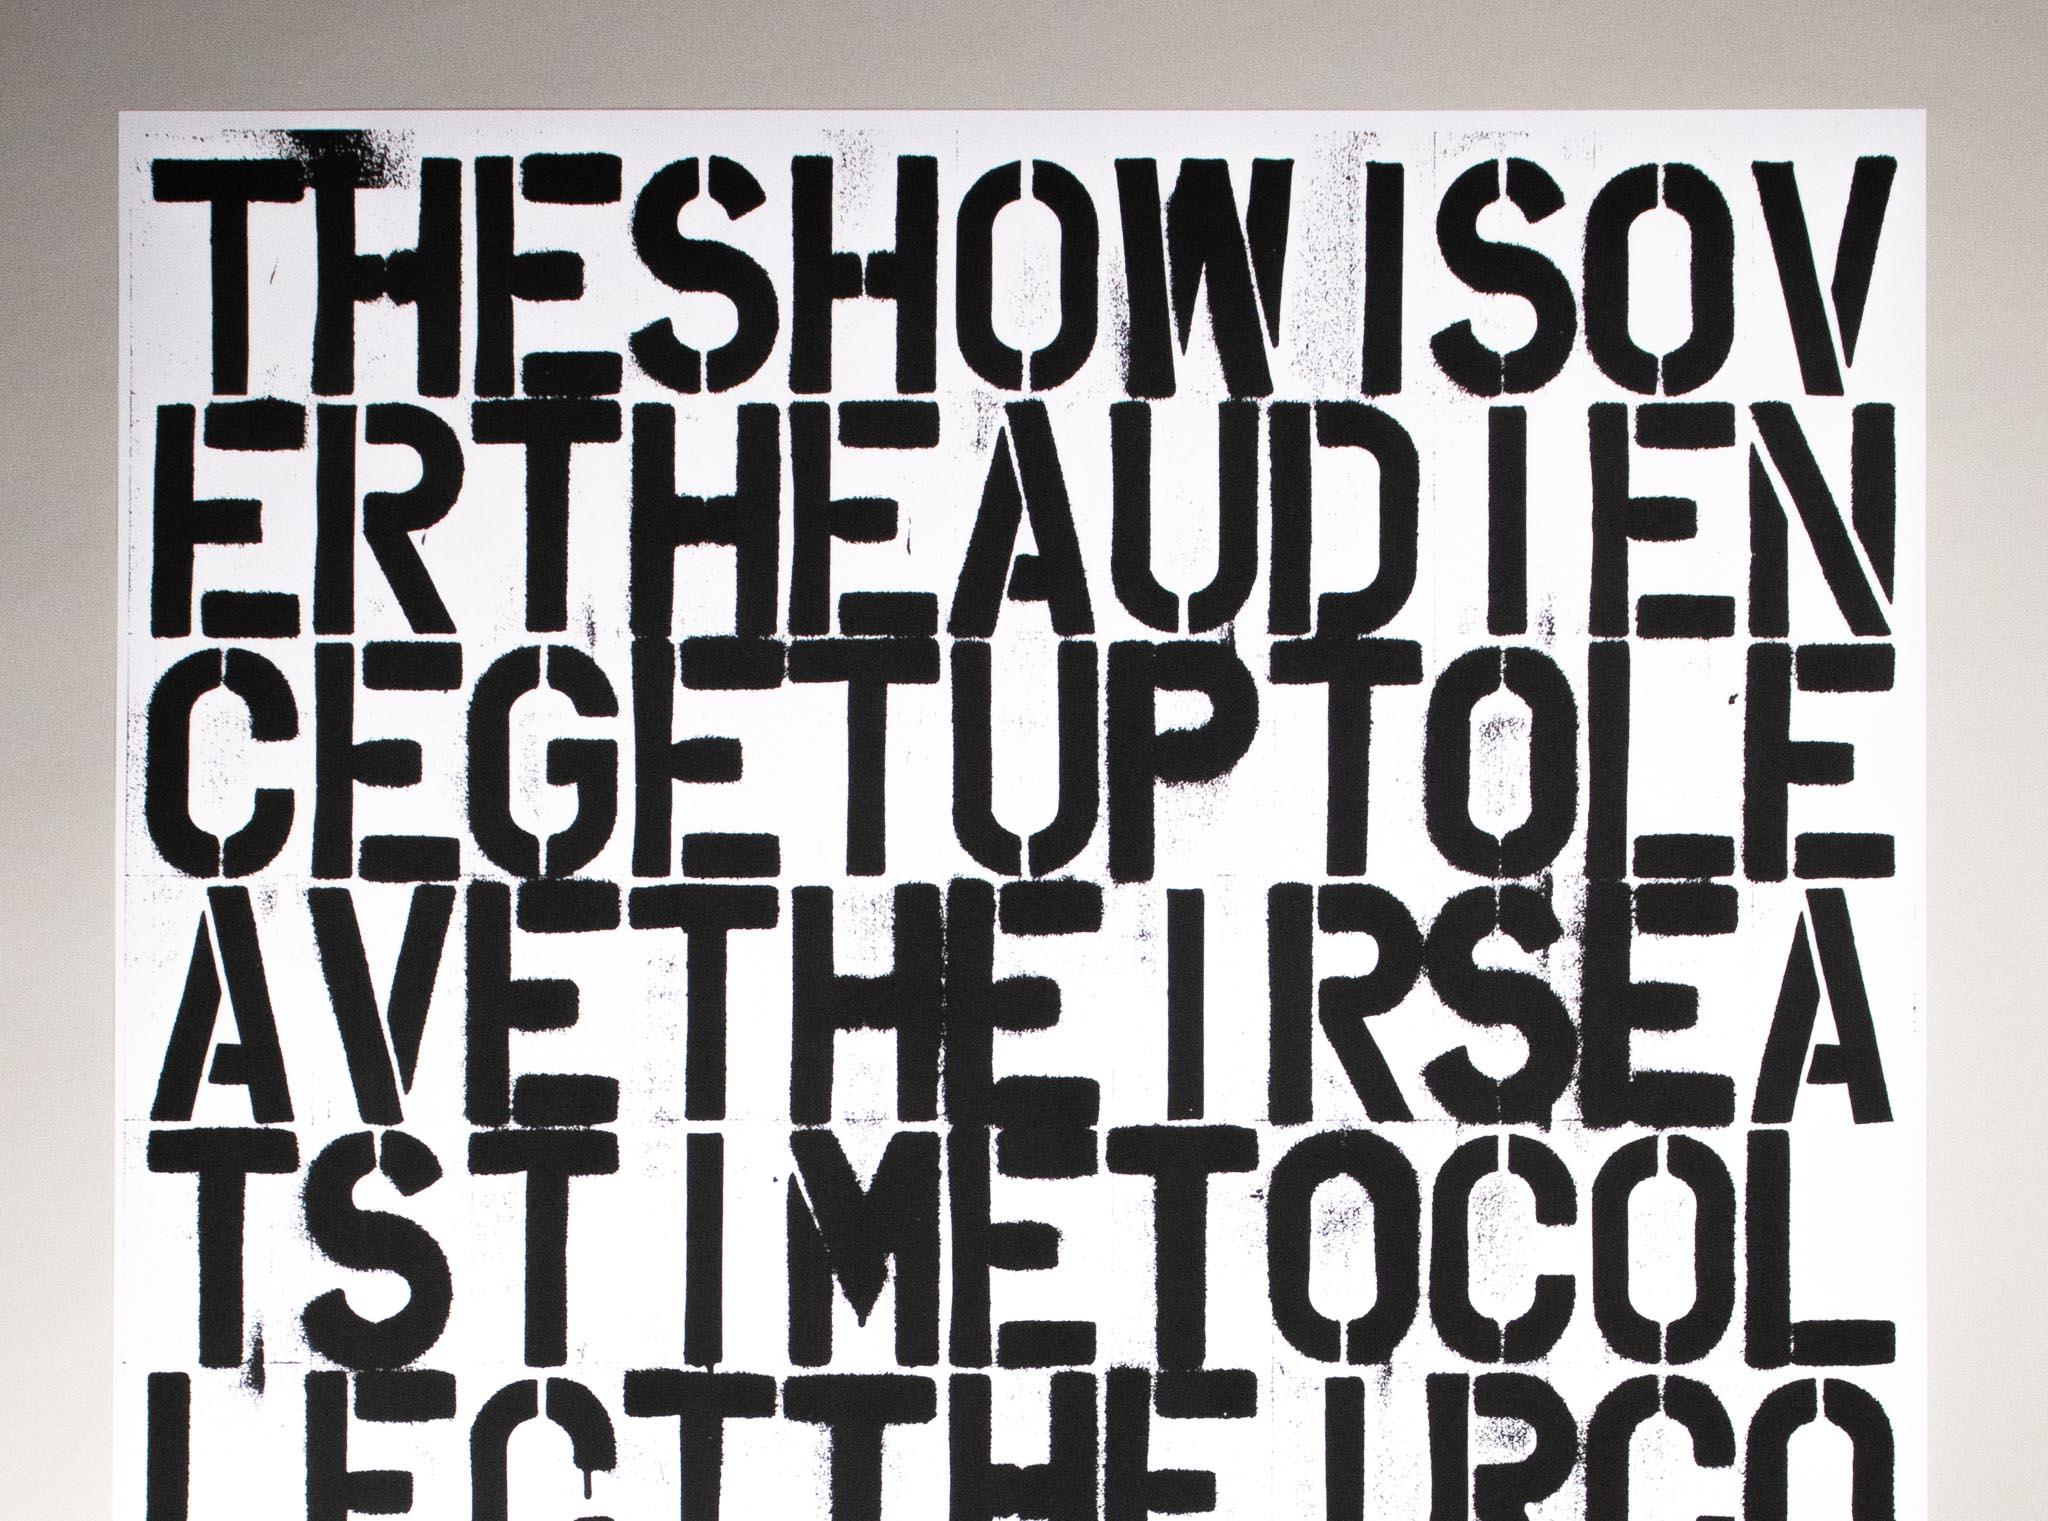 Sans titre (The Show is Over) - 2019 (1993) - Lithographie originale - Lithographie sous licence 3